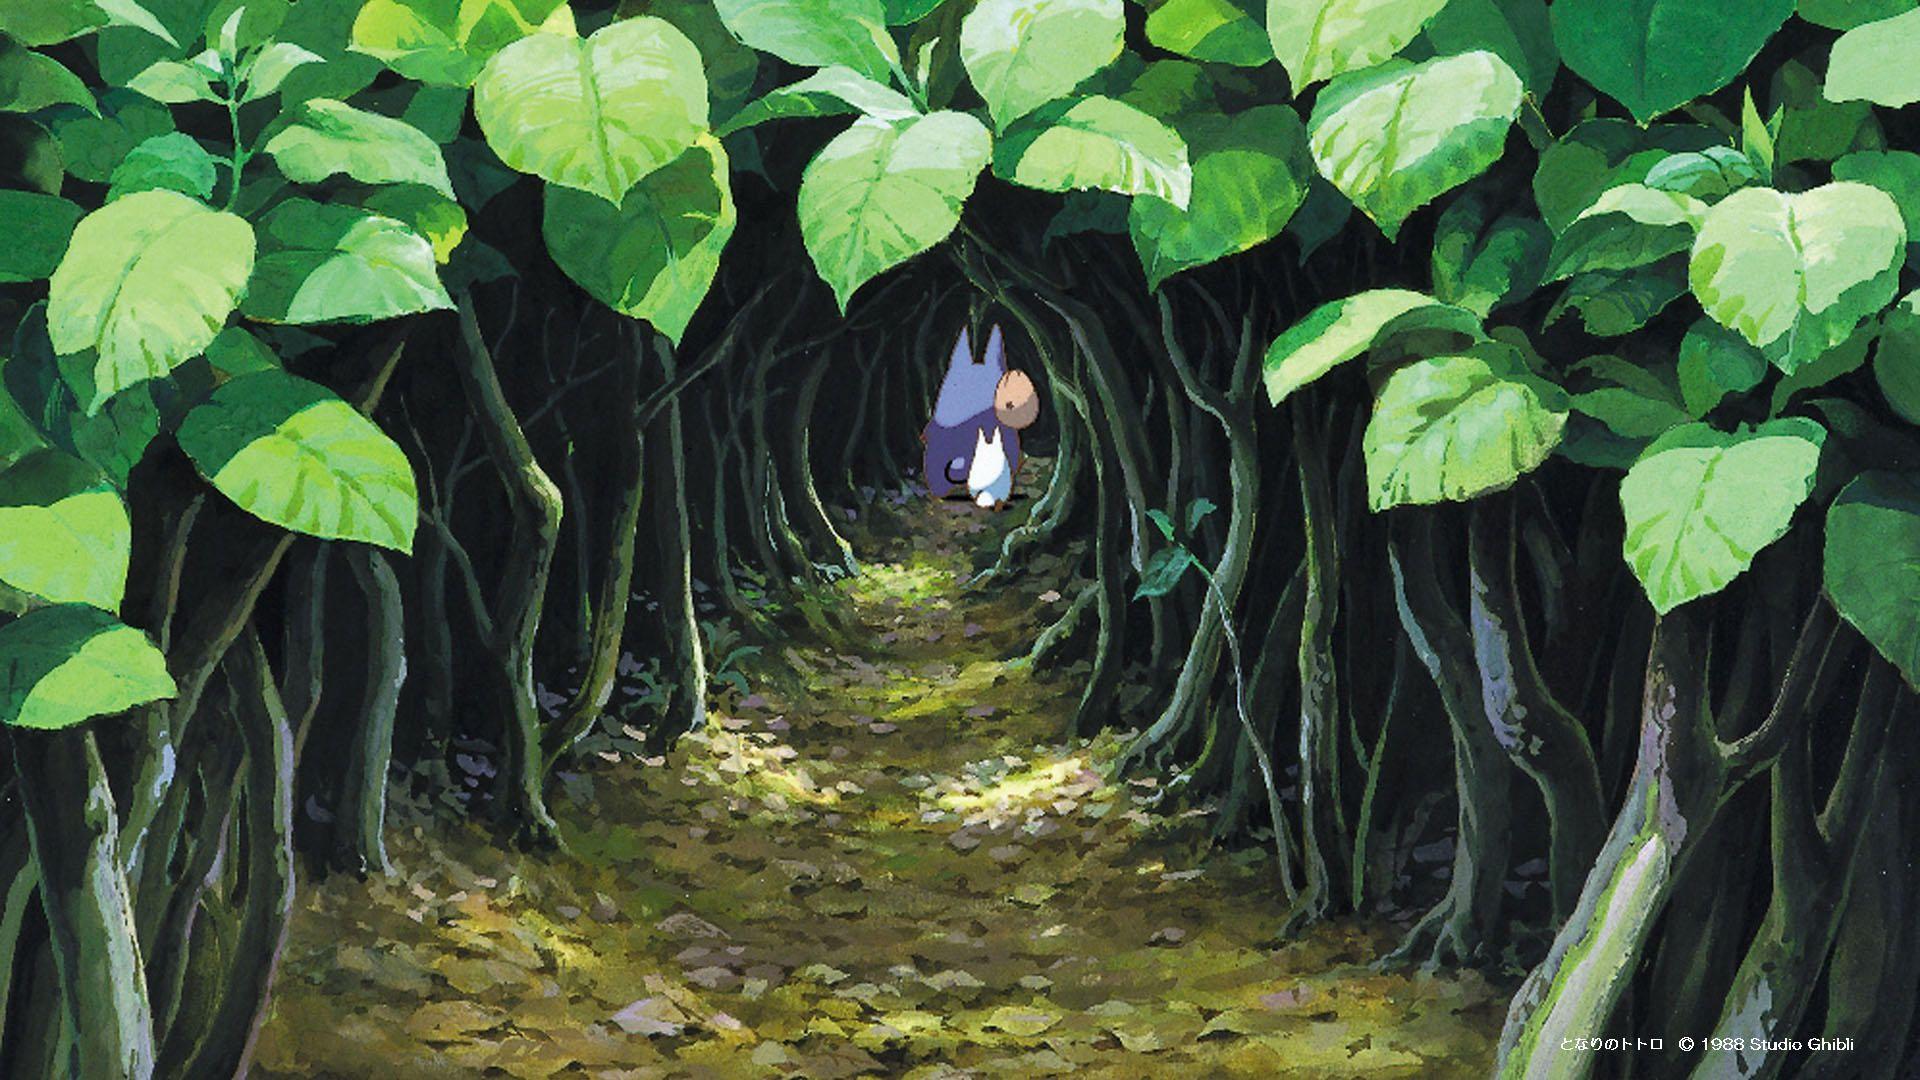 Studio Ghibli Pc Wallpapers Top Free Studio Ghibli Pc Backgrounds Wallpaperaccess